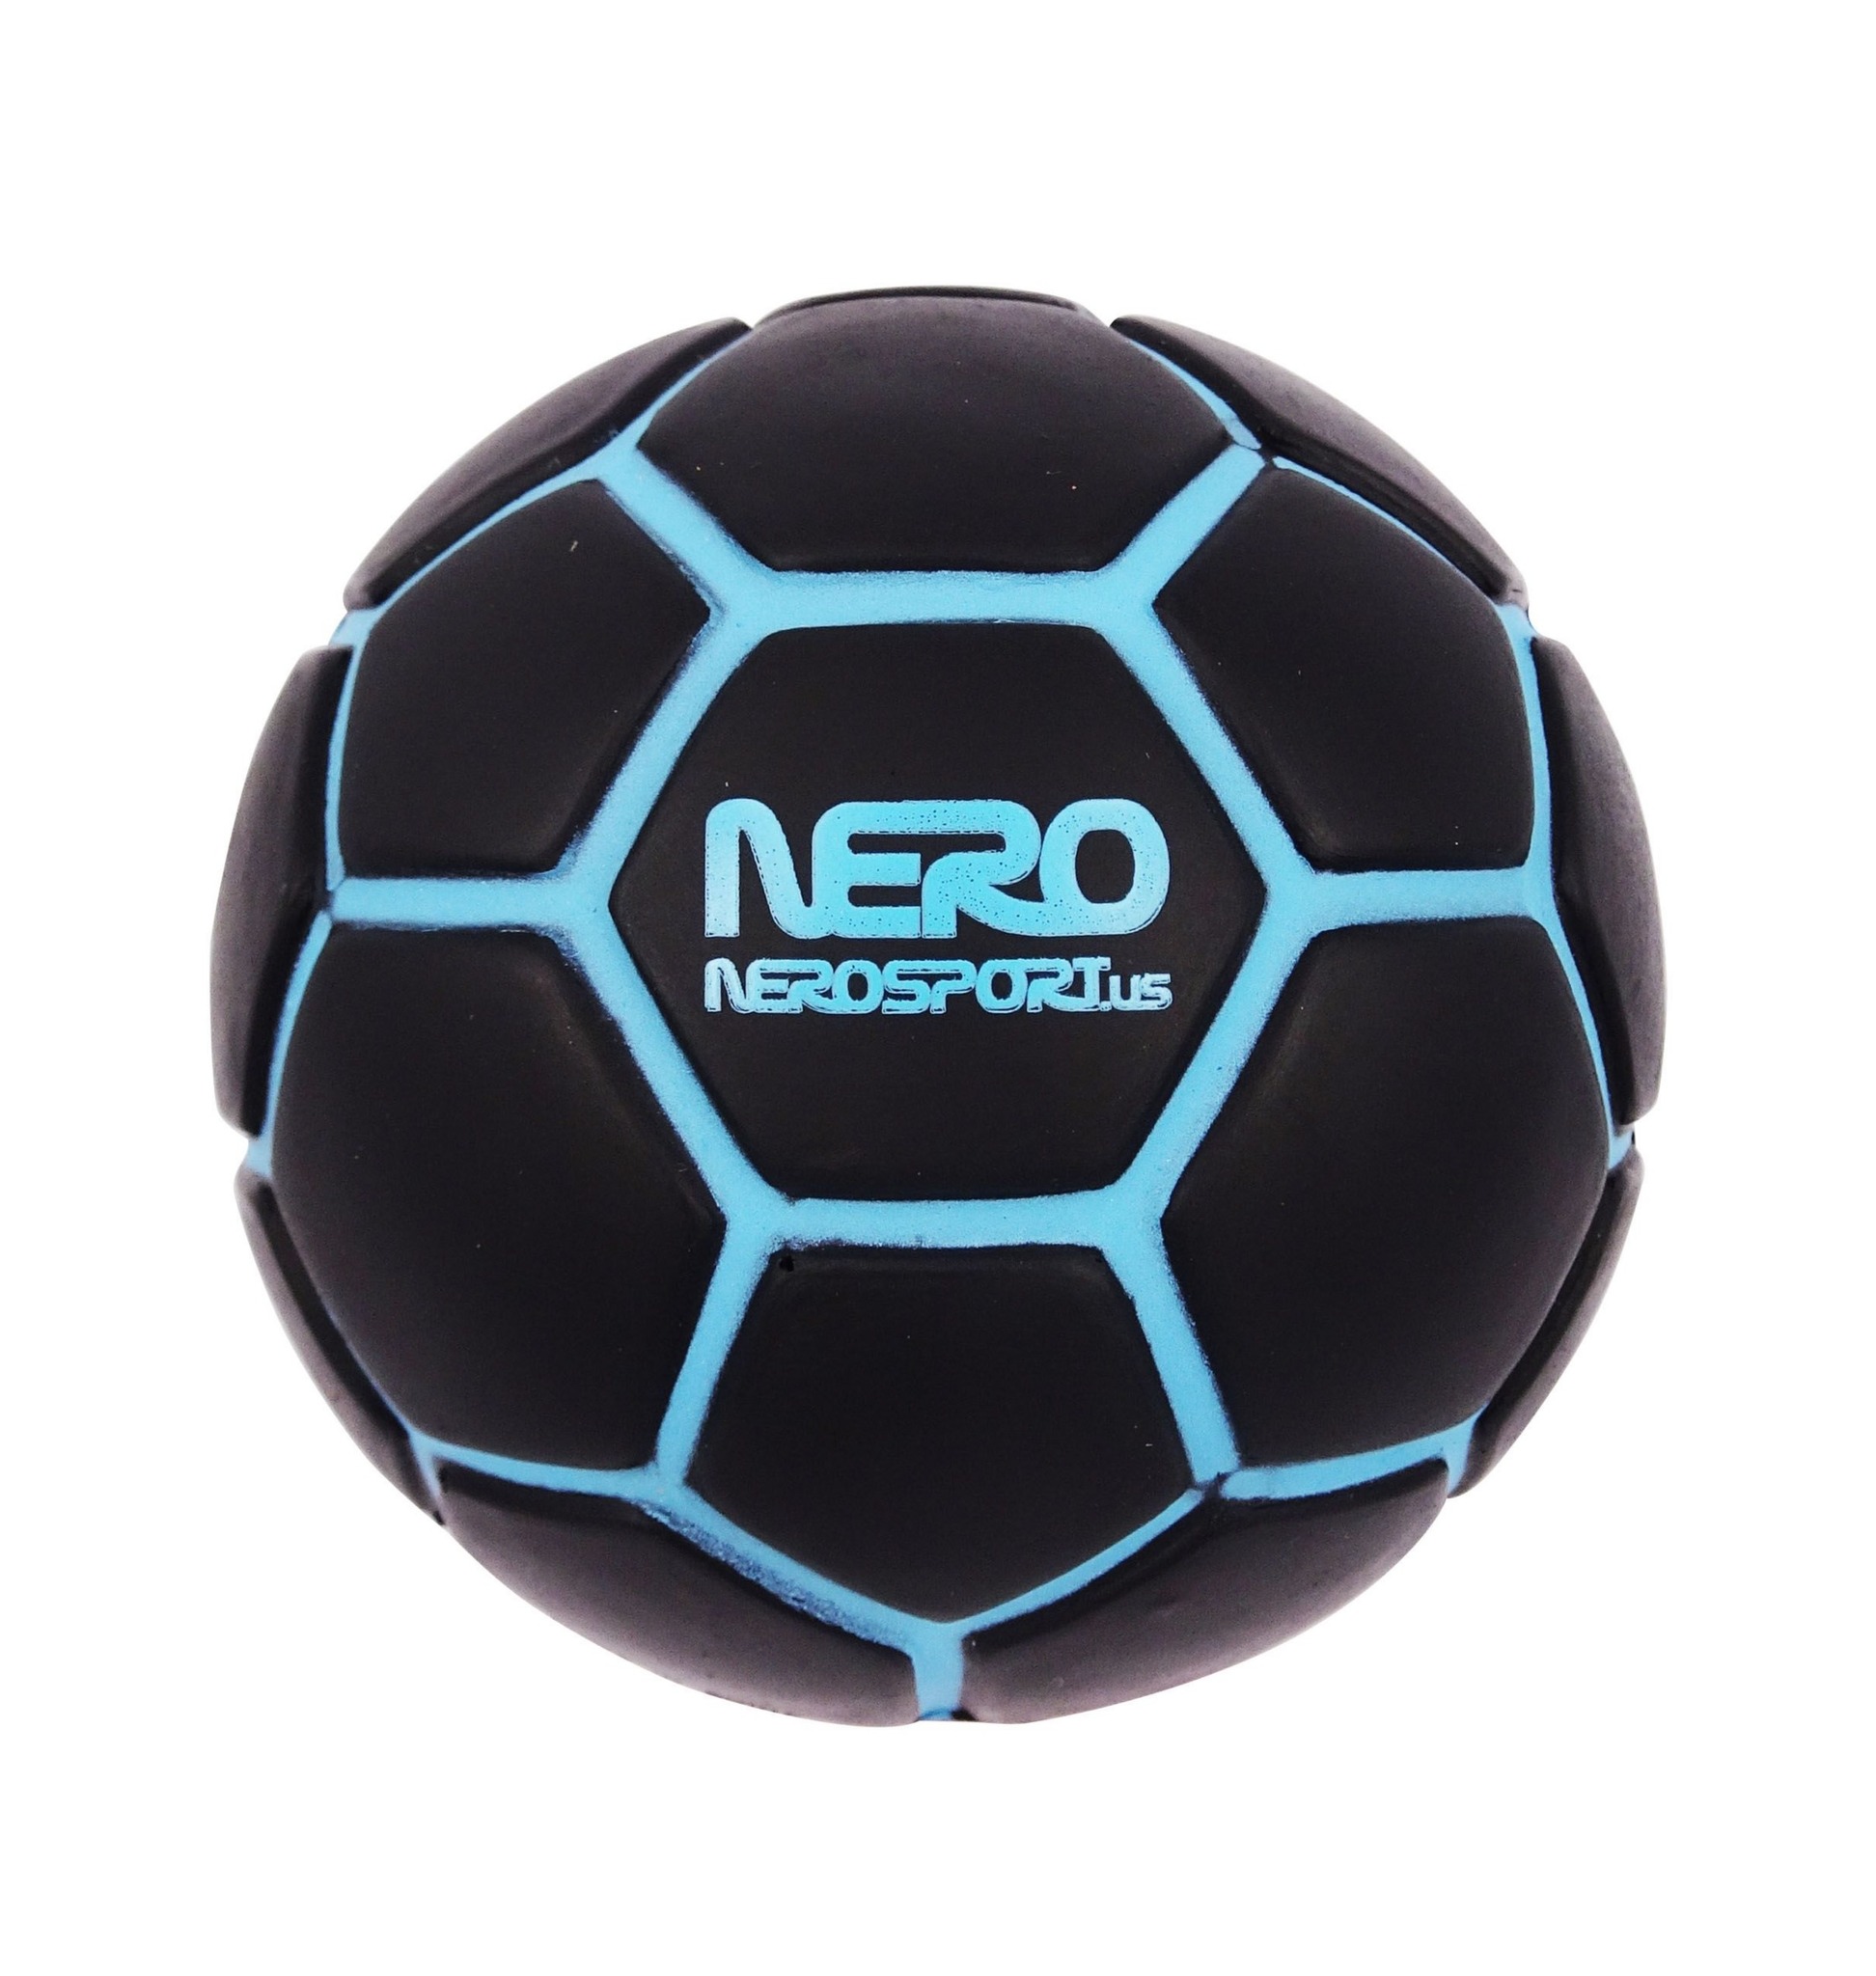 Nero Sport - Goal Black & Blue | Studsboll | 6,8cm | Mjuk & lätt!